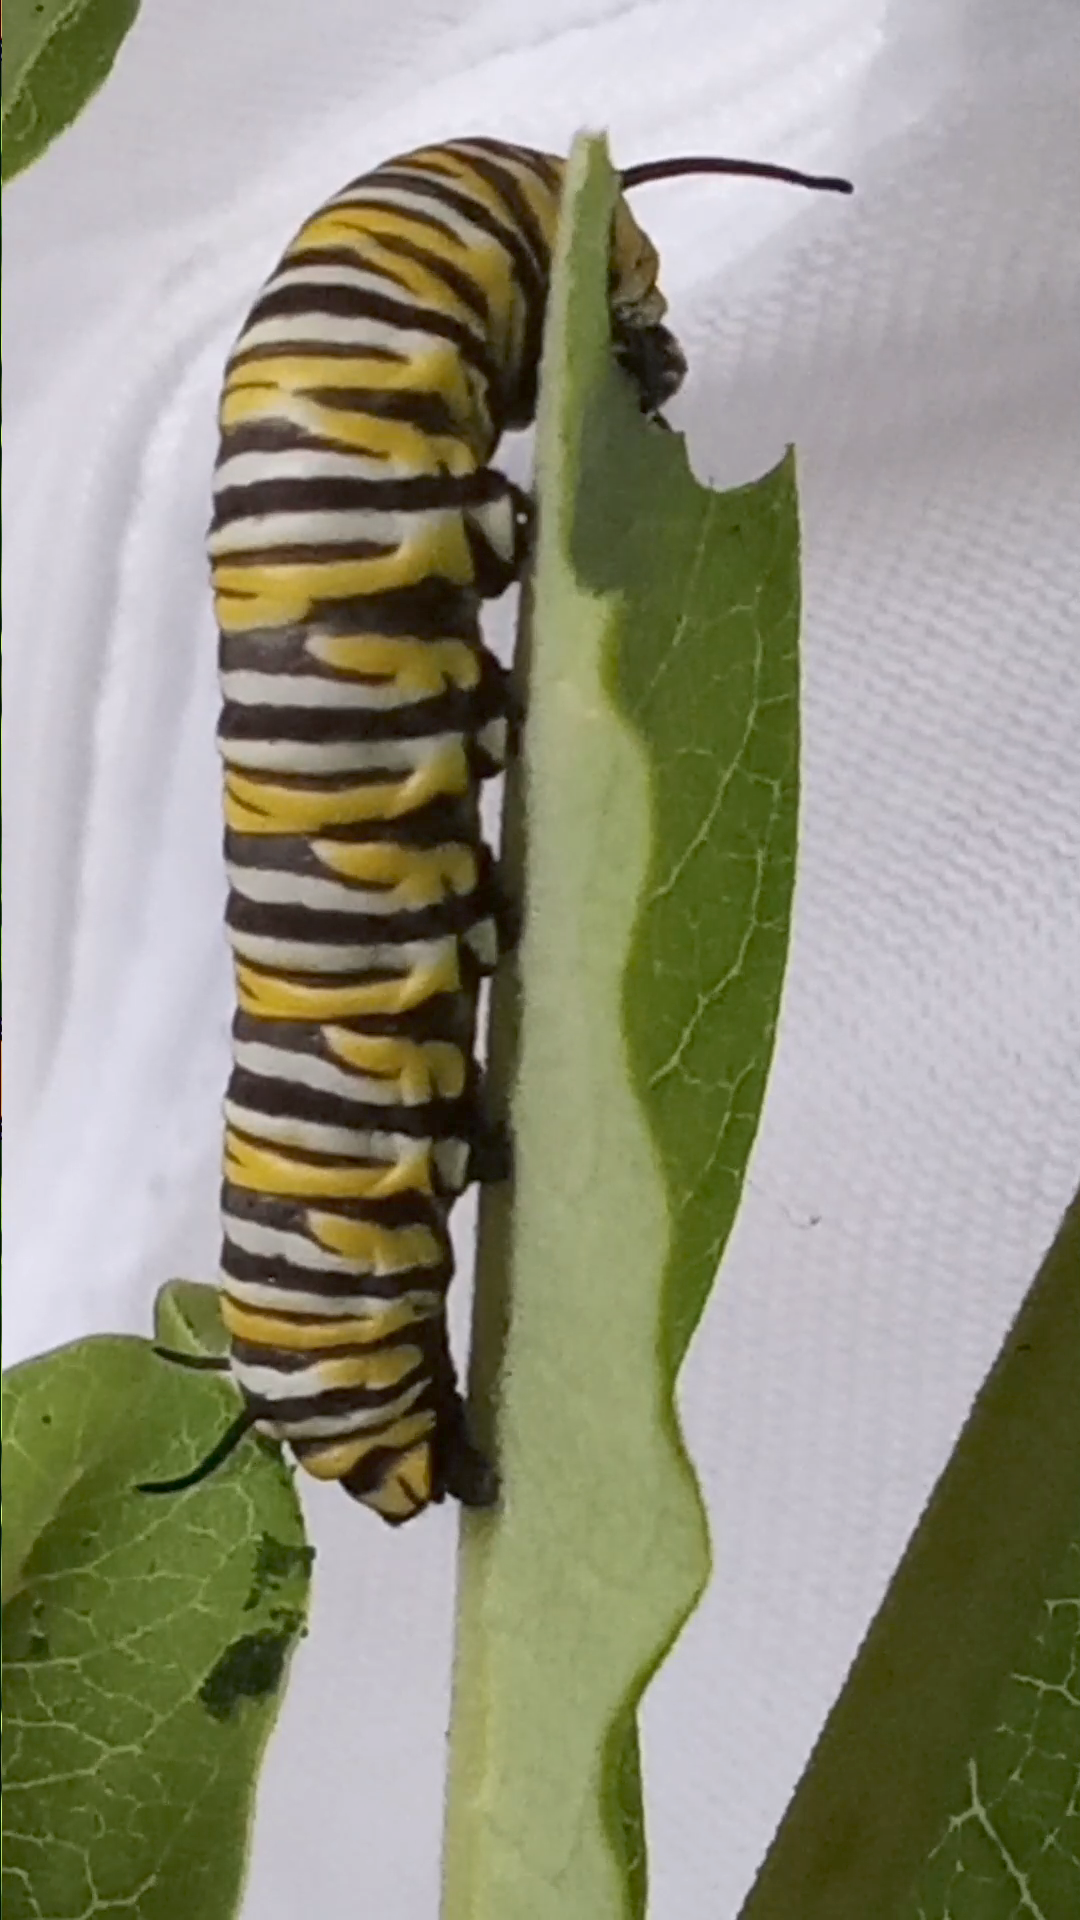 Caterpillars POOP A LOT!